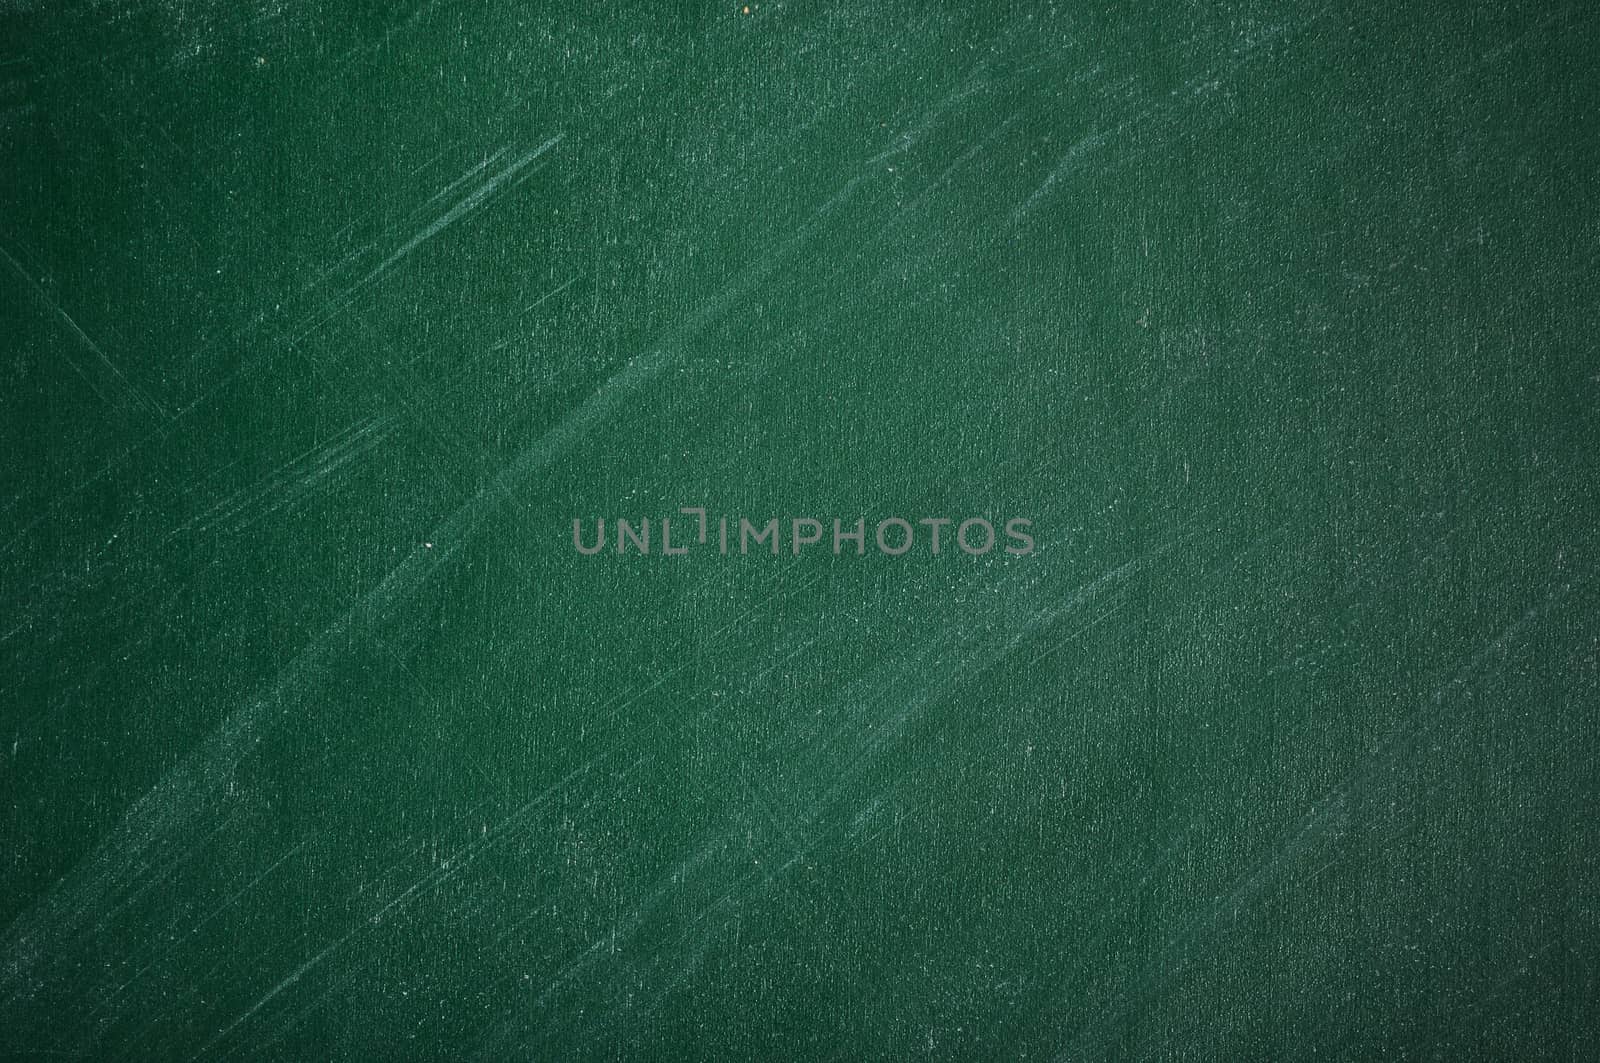 close up of an empty school green chalkboard 